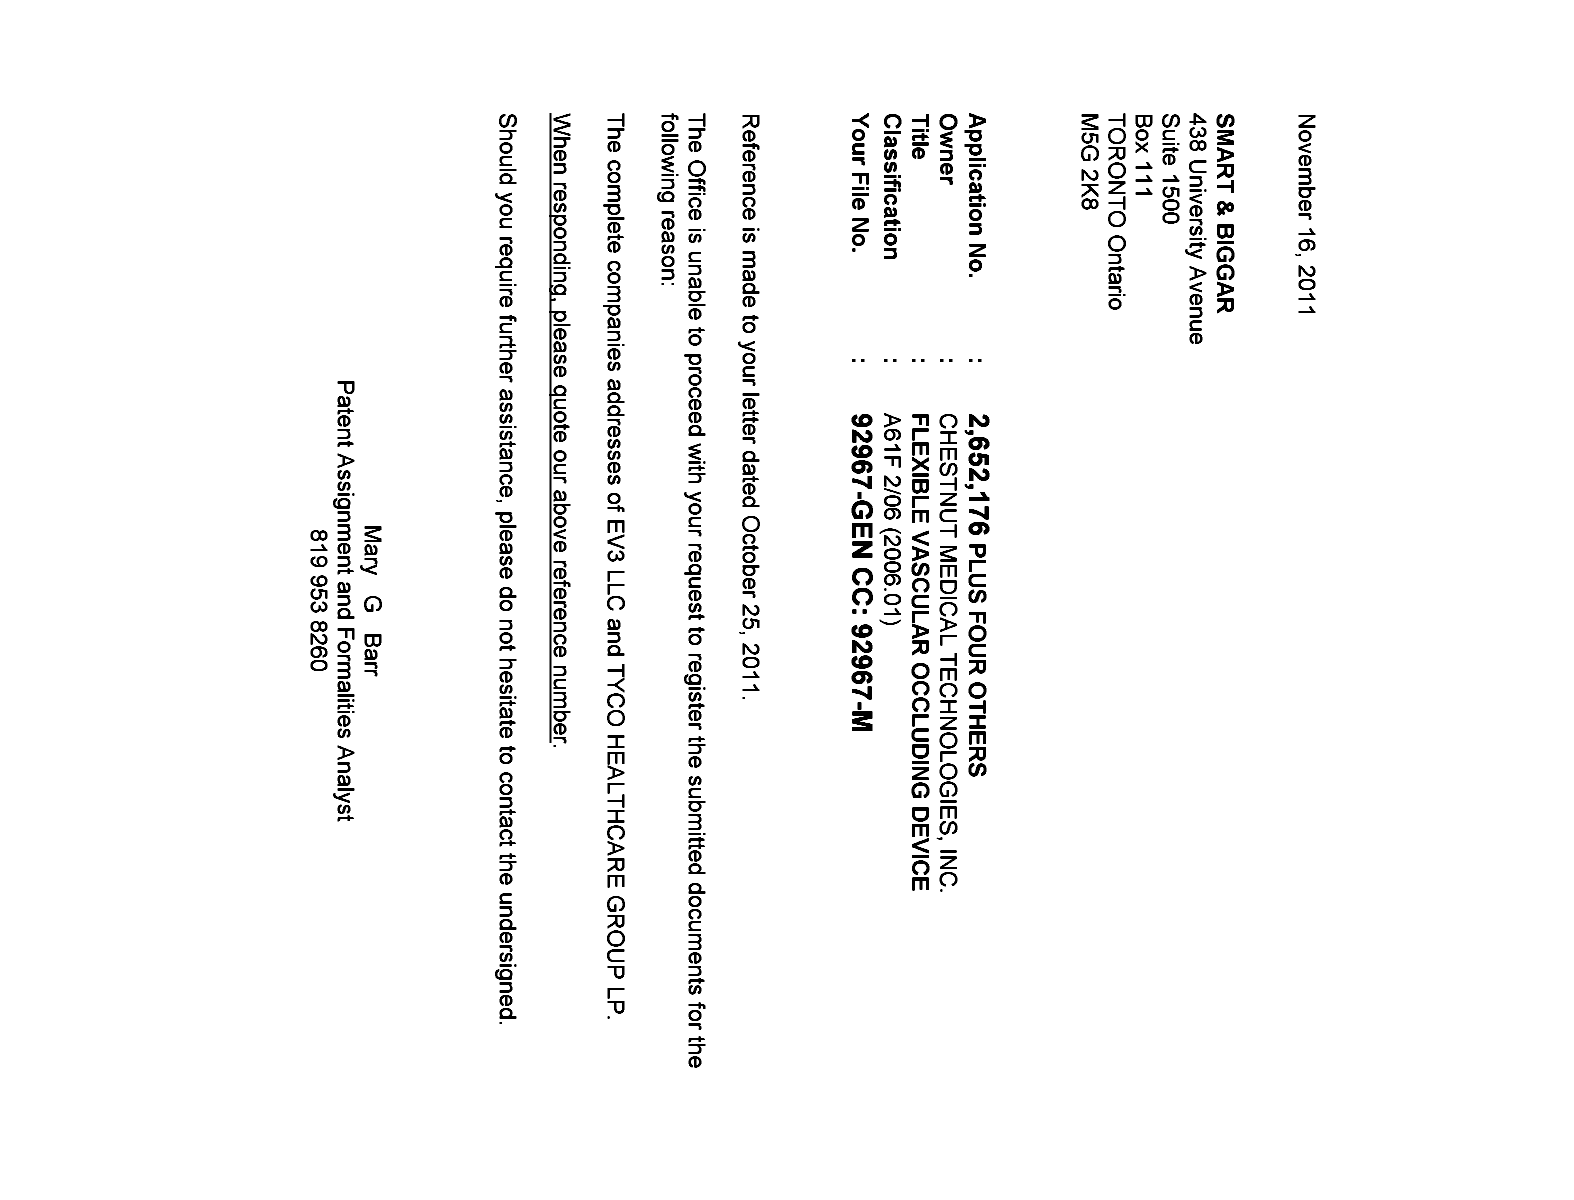 Canadian Patent Document 2652176. Correspondence 20111116. Image 1 of 1